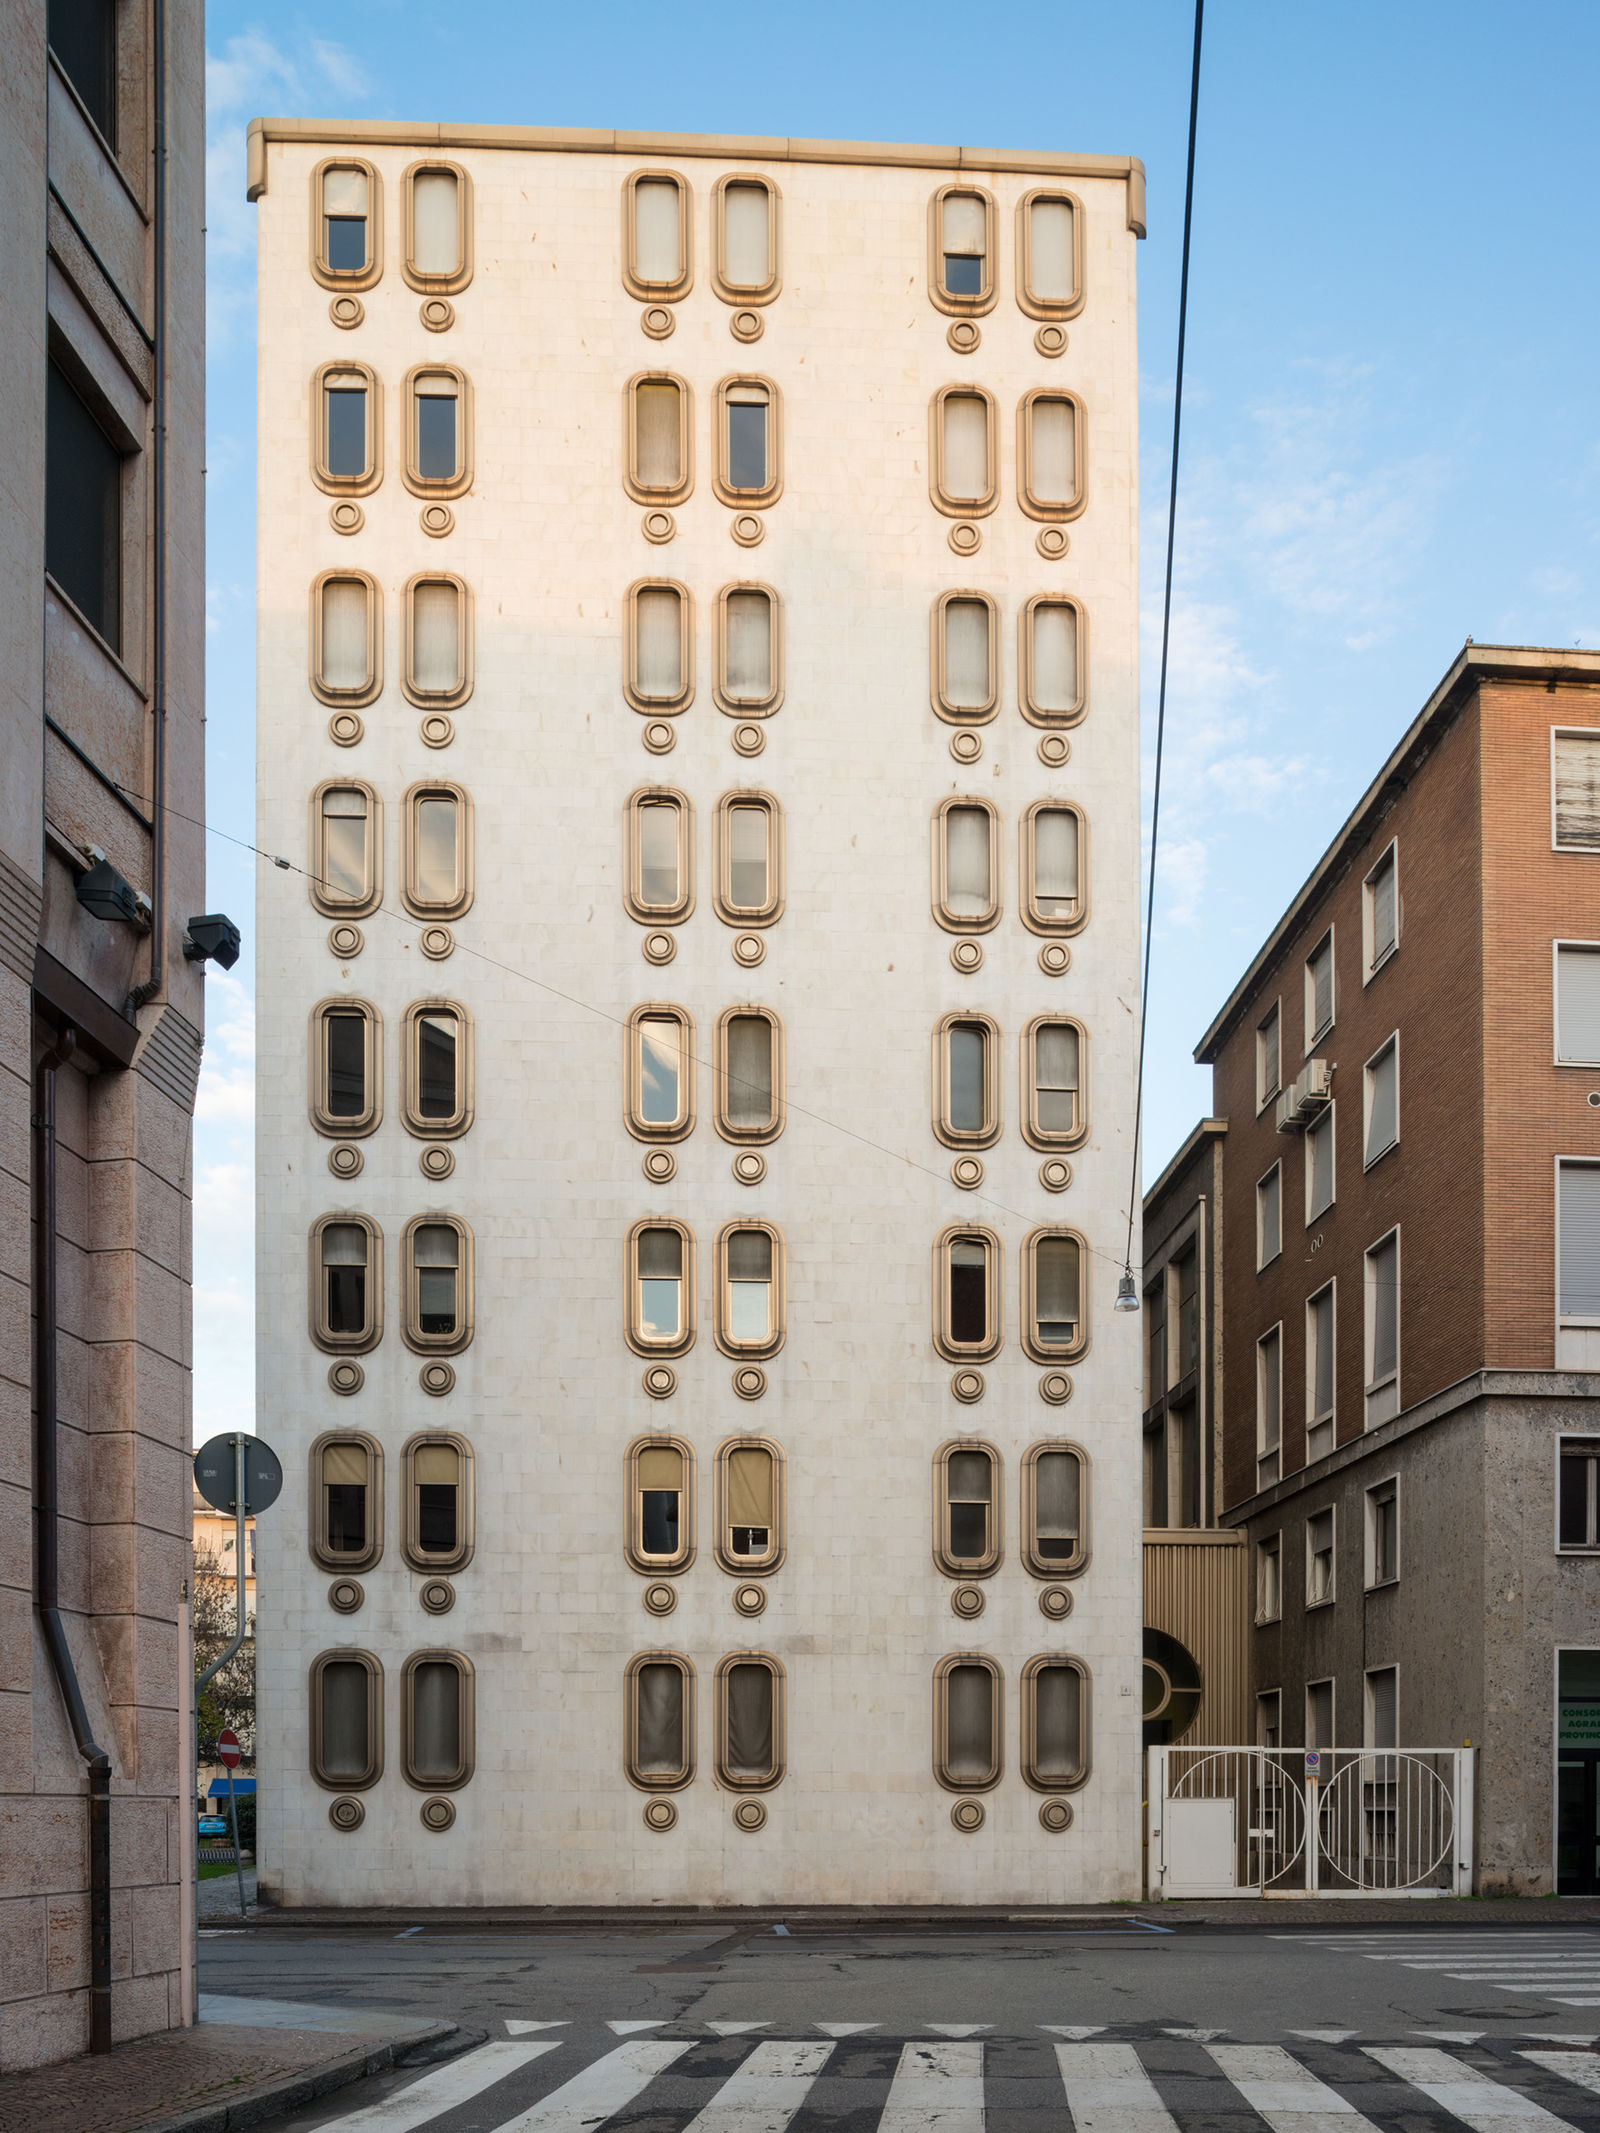 1600x2133, 541 Kb / Enrico Villani, Италия, здание, окна, иллюминатор, архитектура, город